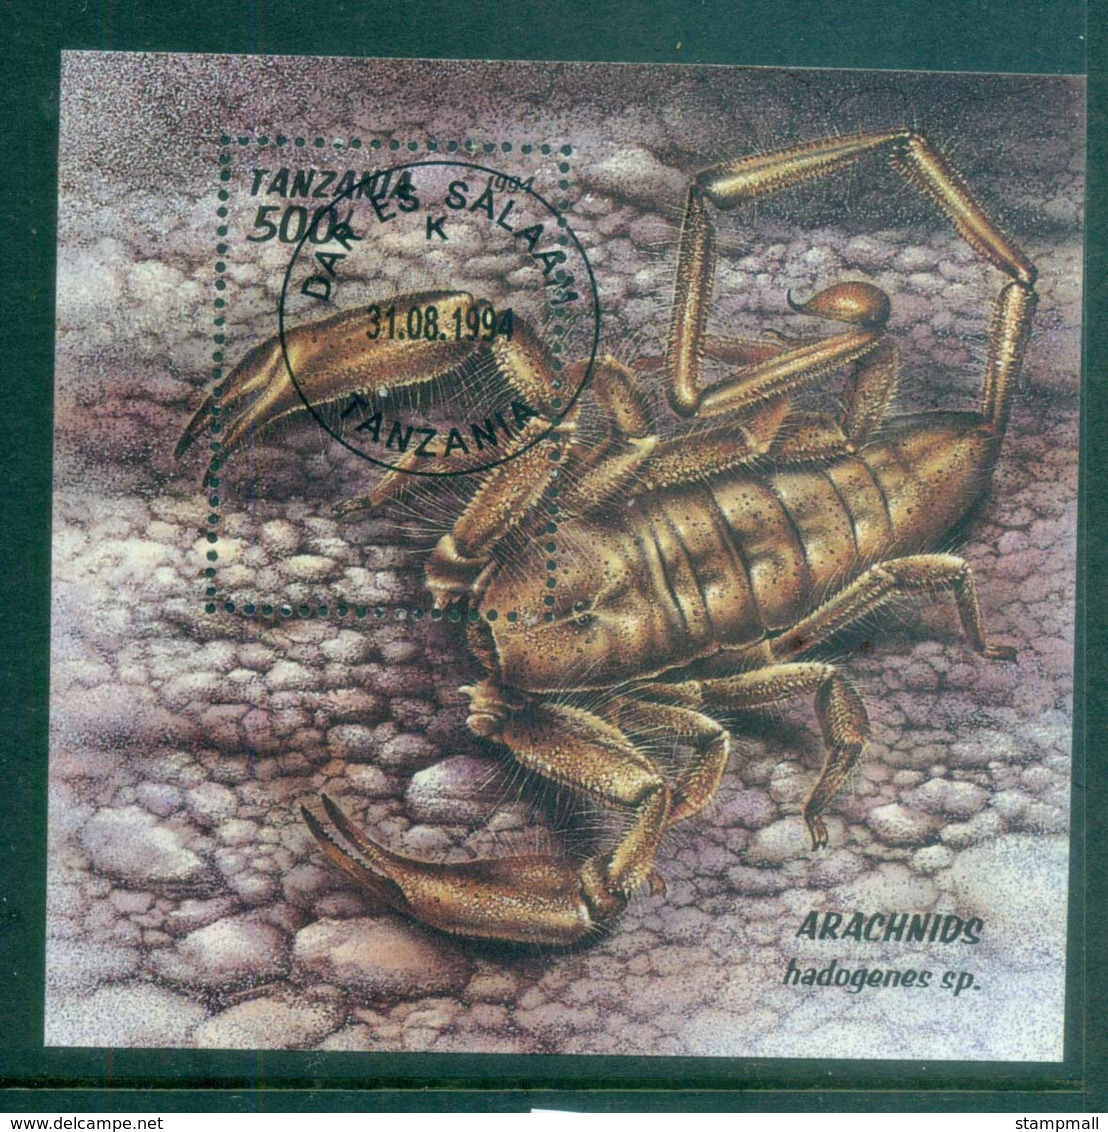 Tanzania 1994 Arachnids, Insect, Scorpion MS CTO Lot84825 - Swaziland (1968-...)